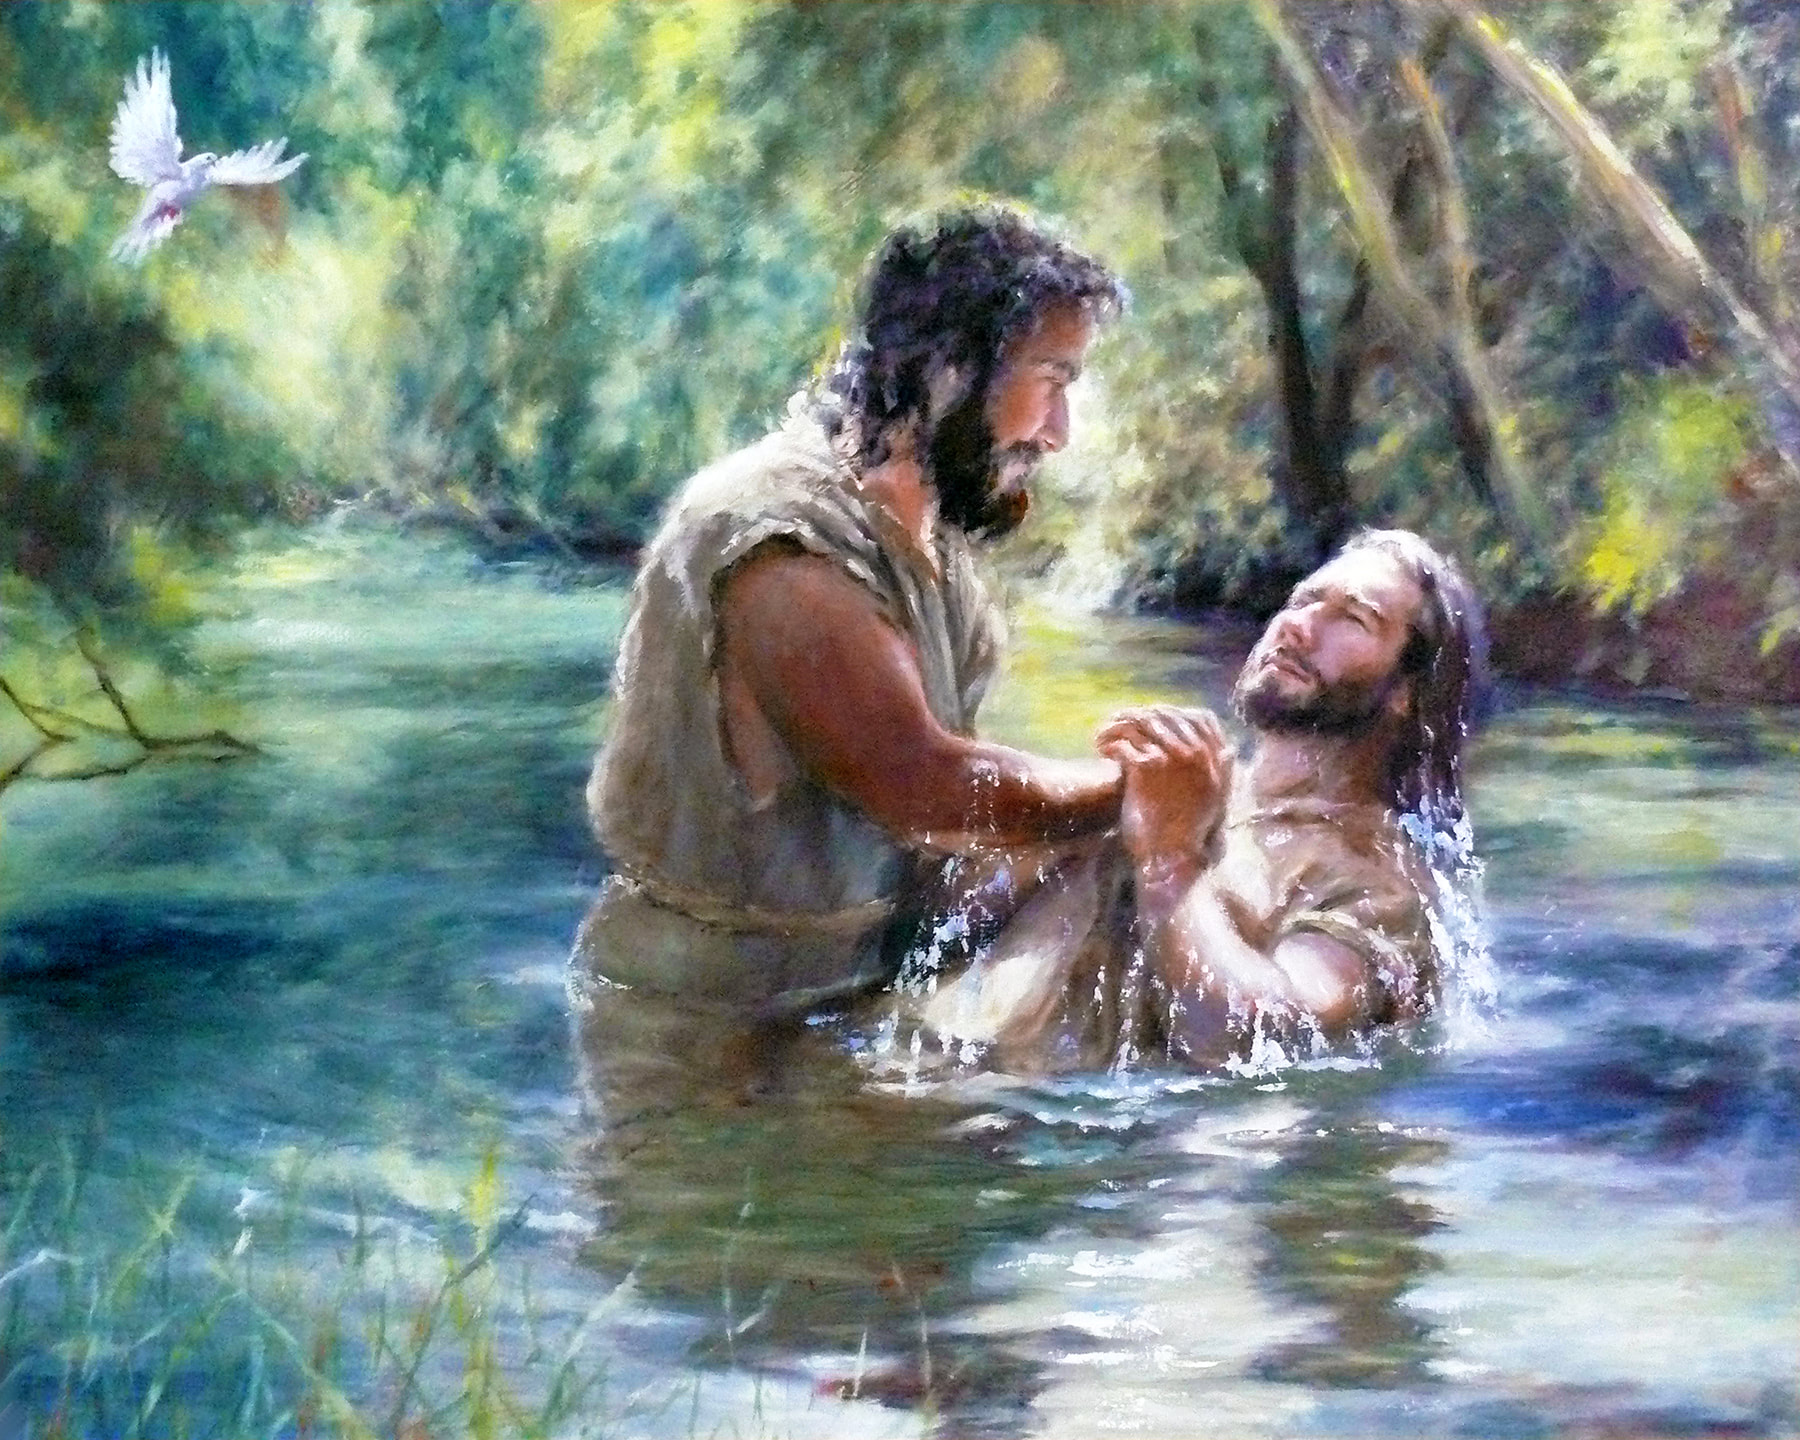 baptism of christ